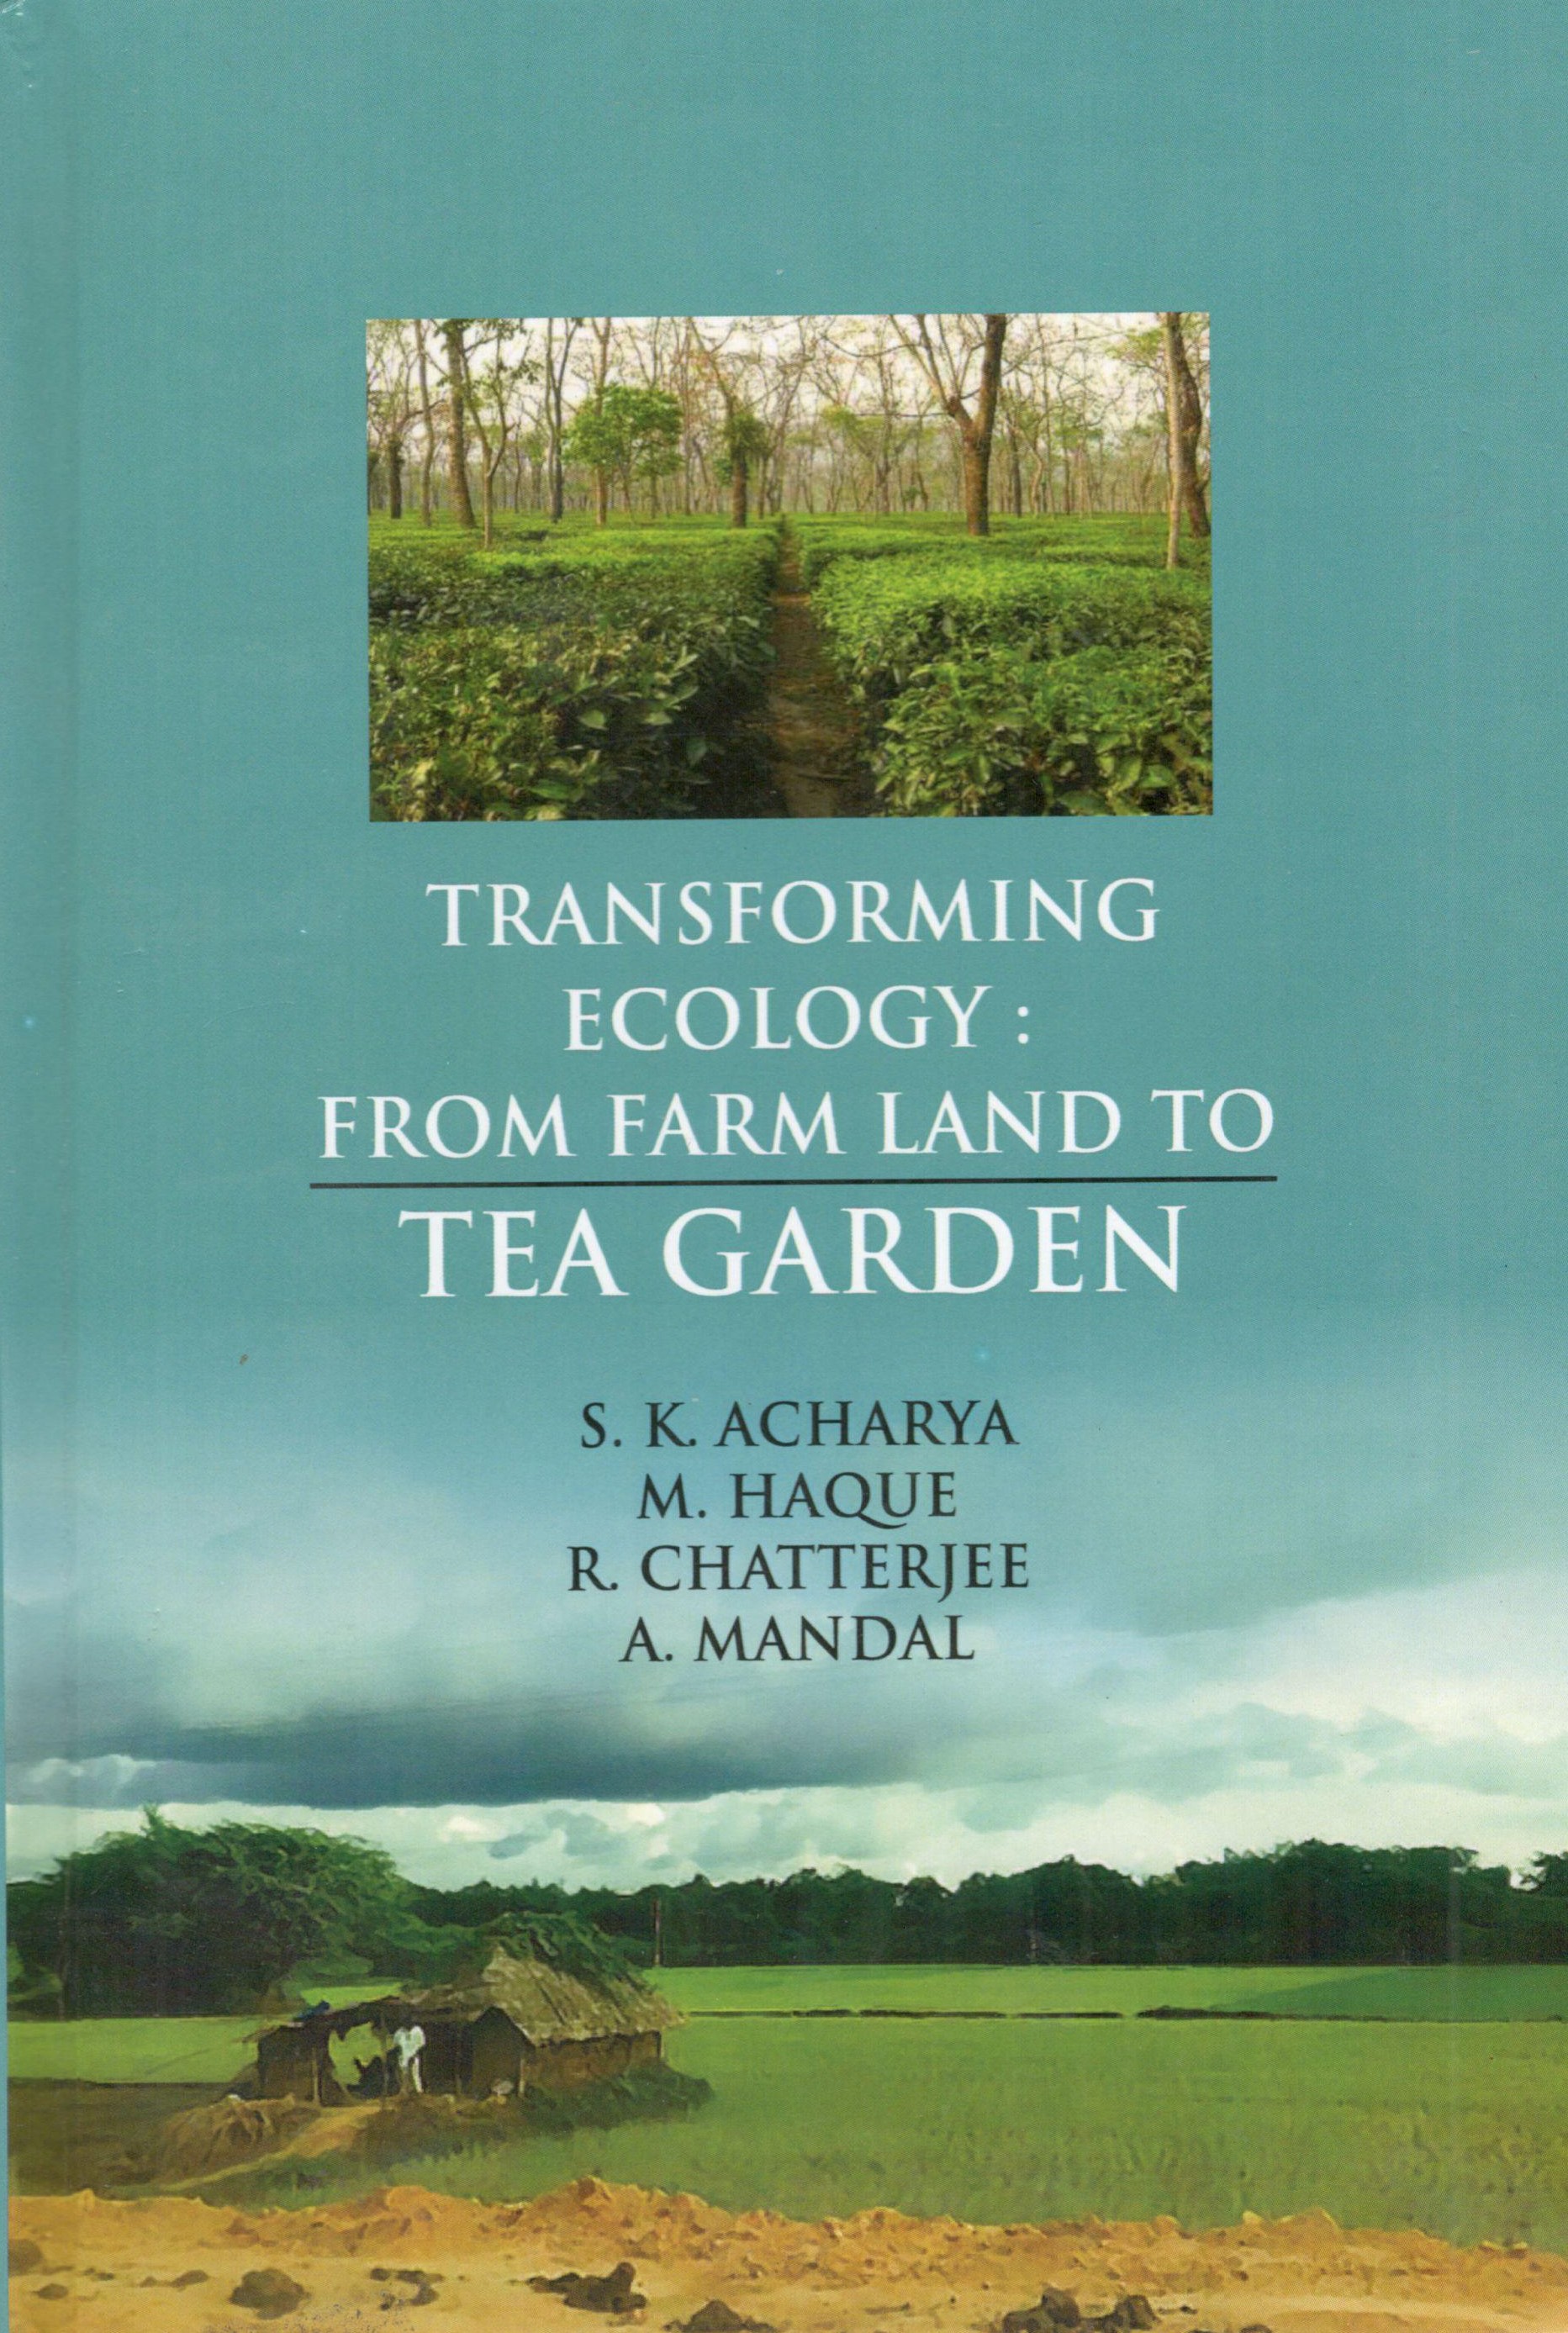 Transforming Ecology From Farm Land to Tea Garden